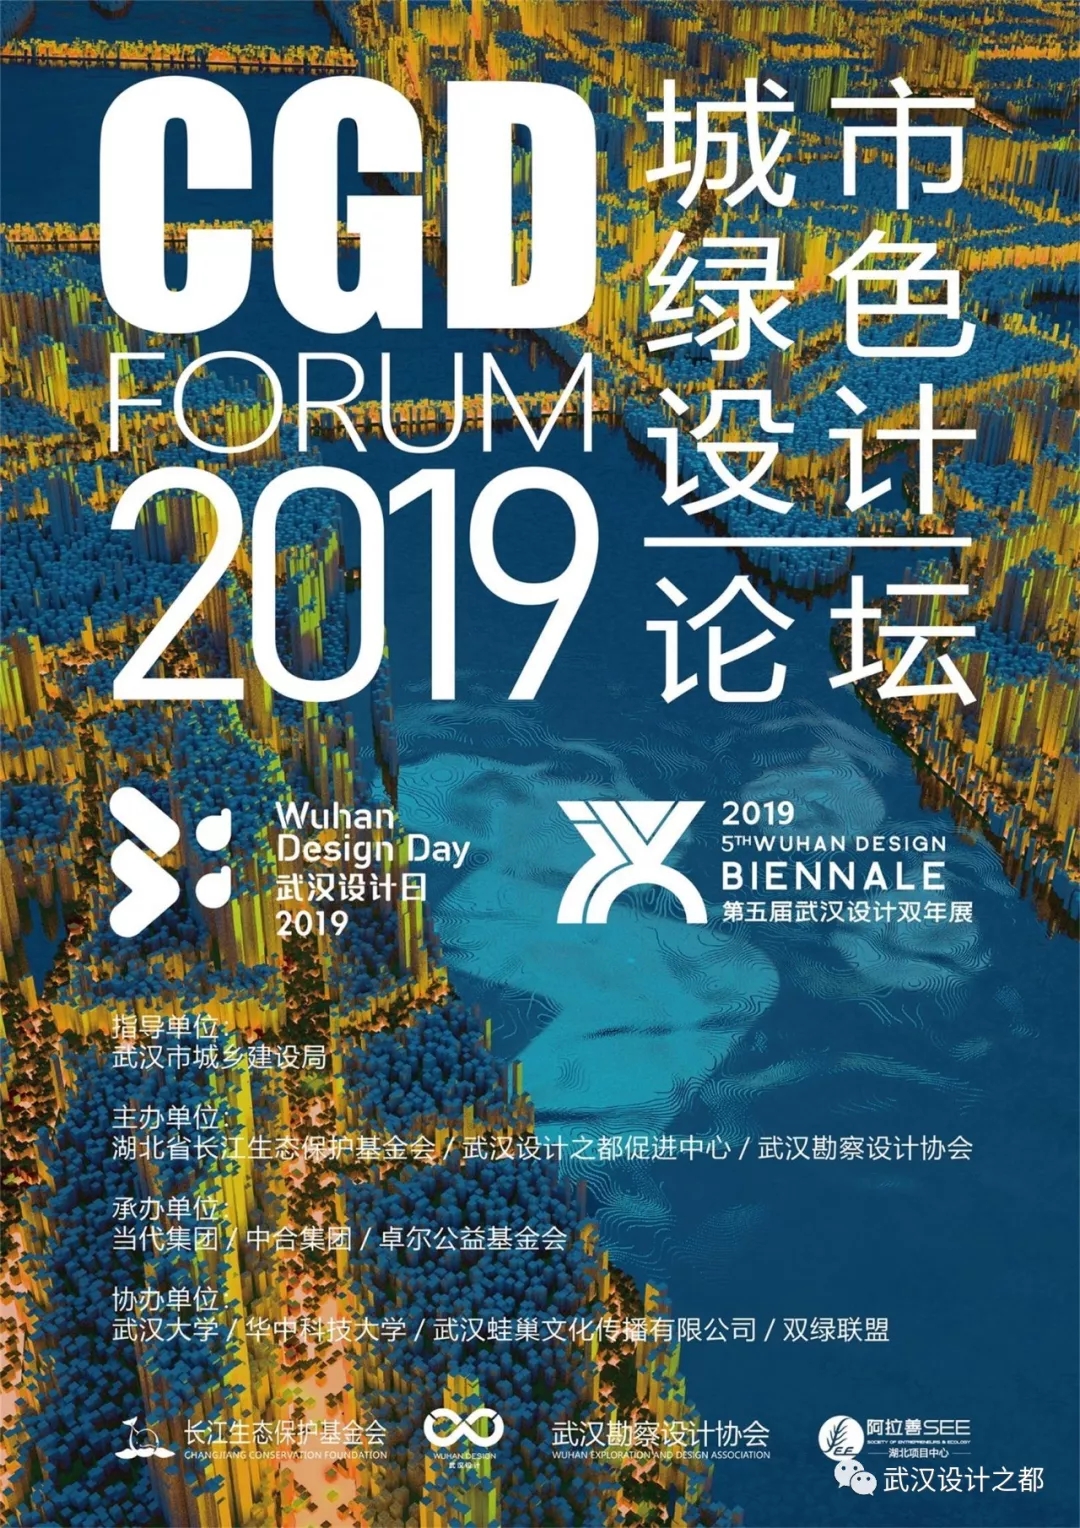 2019 CGD forum 城市•绿色•设计论坛在武汉设计之都客厅翟雅阁举办